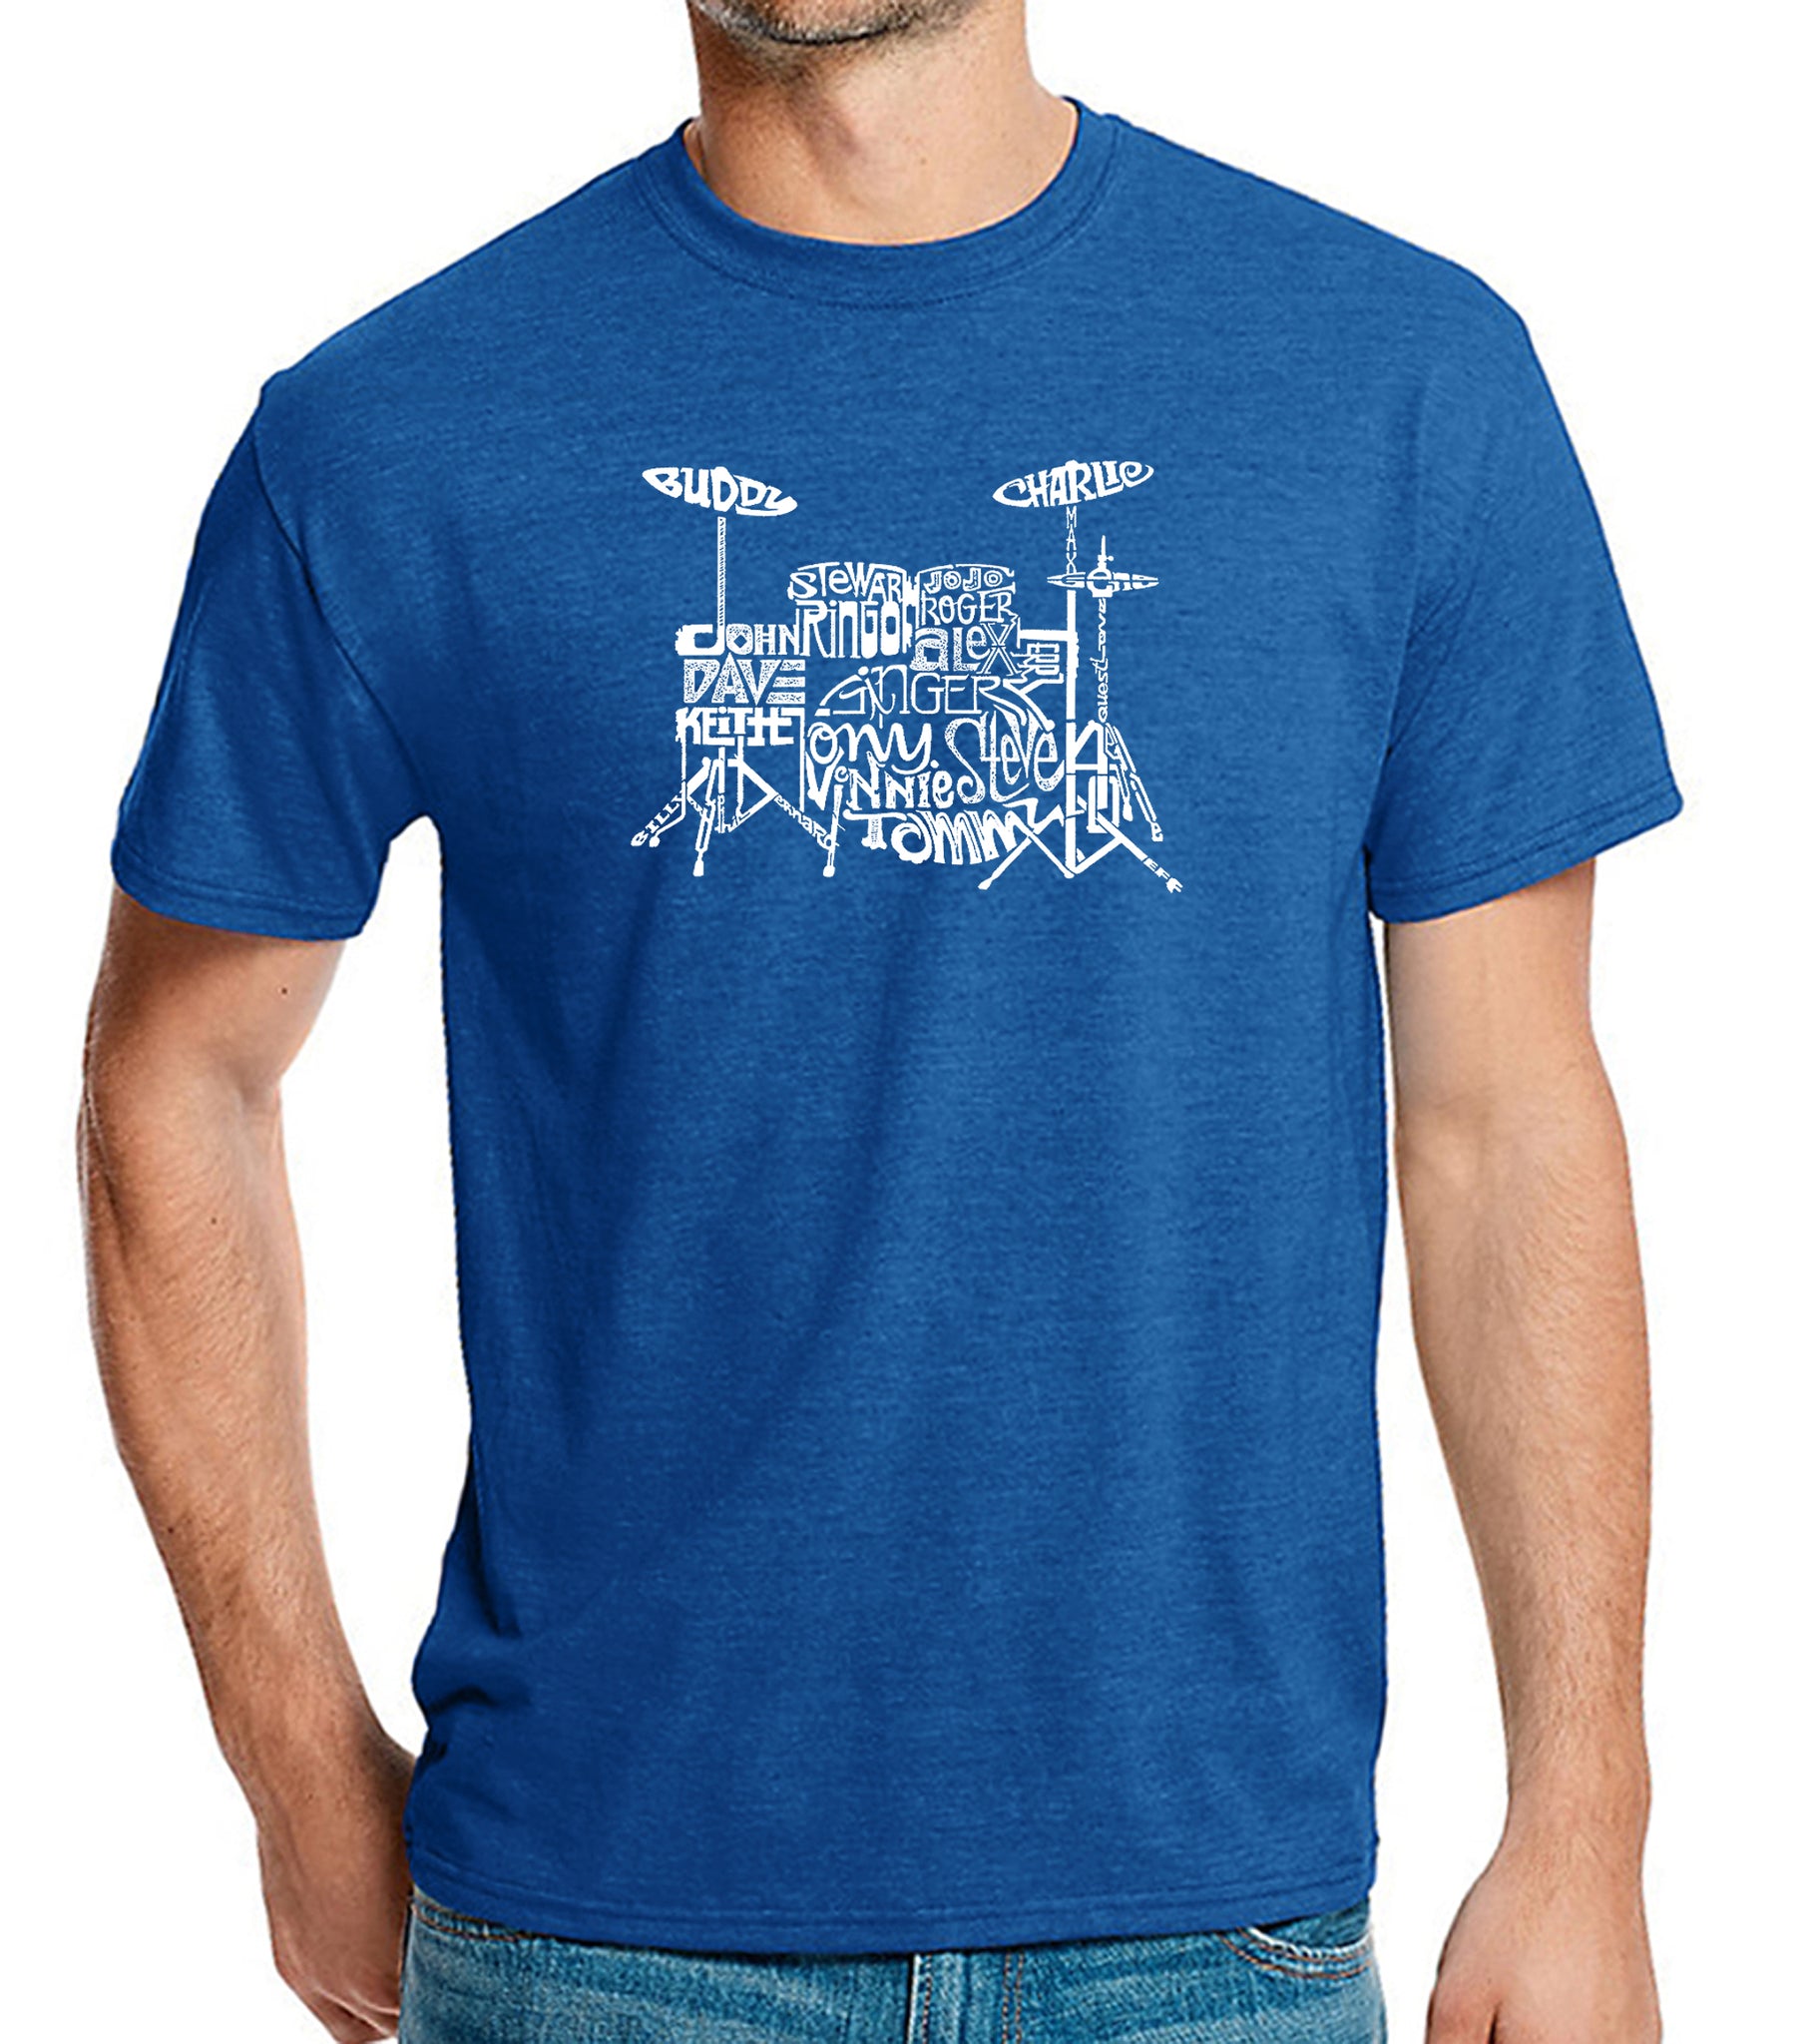 Drums - Men's Word Art T-Shirt Small / Navy